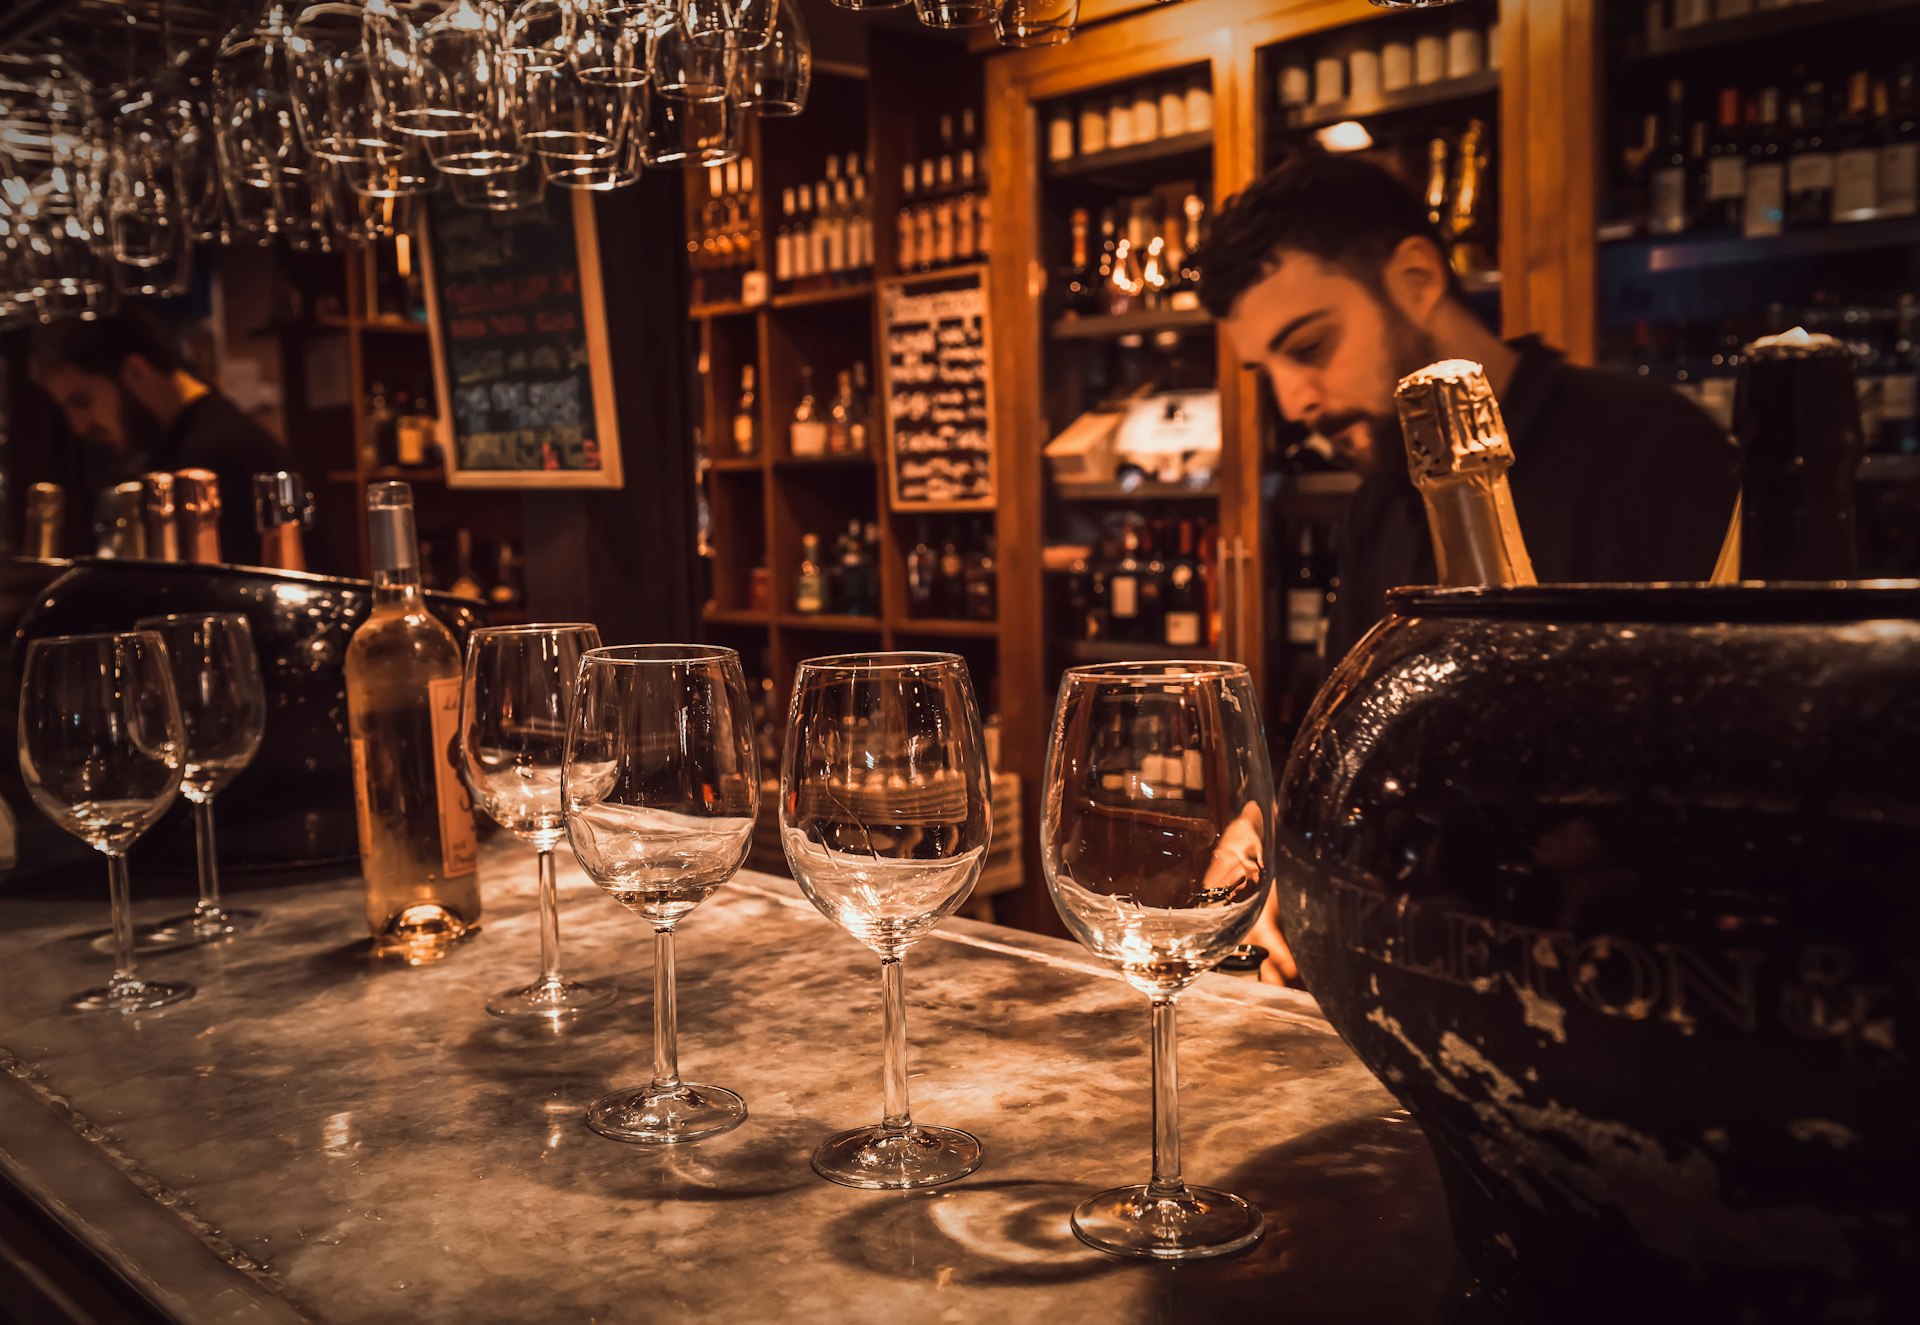 Wine glasses lined up in a Madrid bar © Catarina Belova / Shutterstock